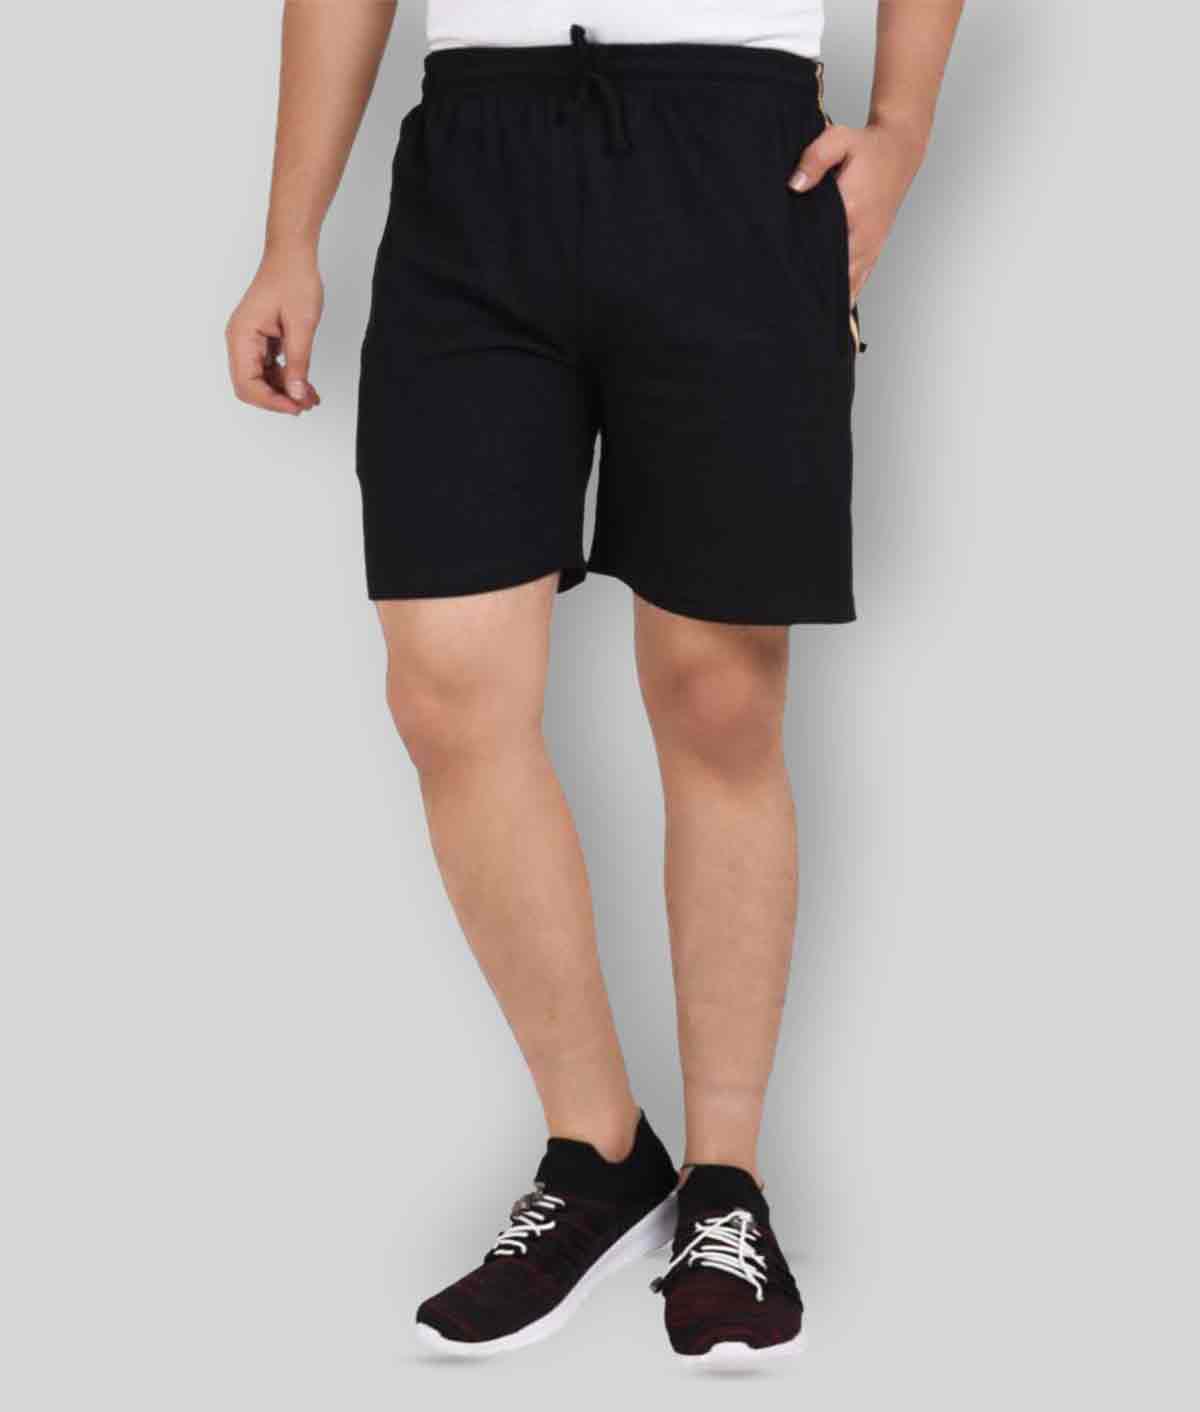     			Neo Garments Black Shorts SINGLE MEN'S SHORTS BLACK (PLUS SIZES : M TO 7XL).